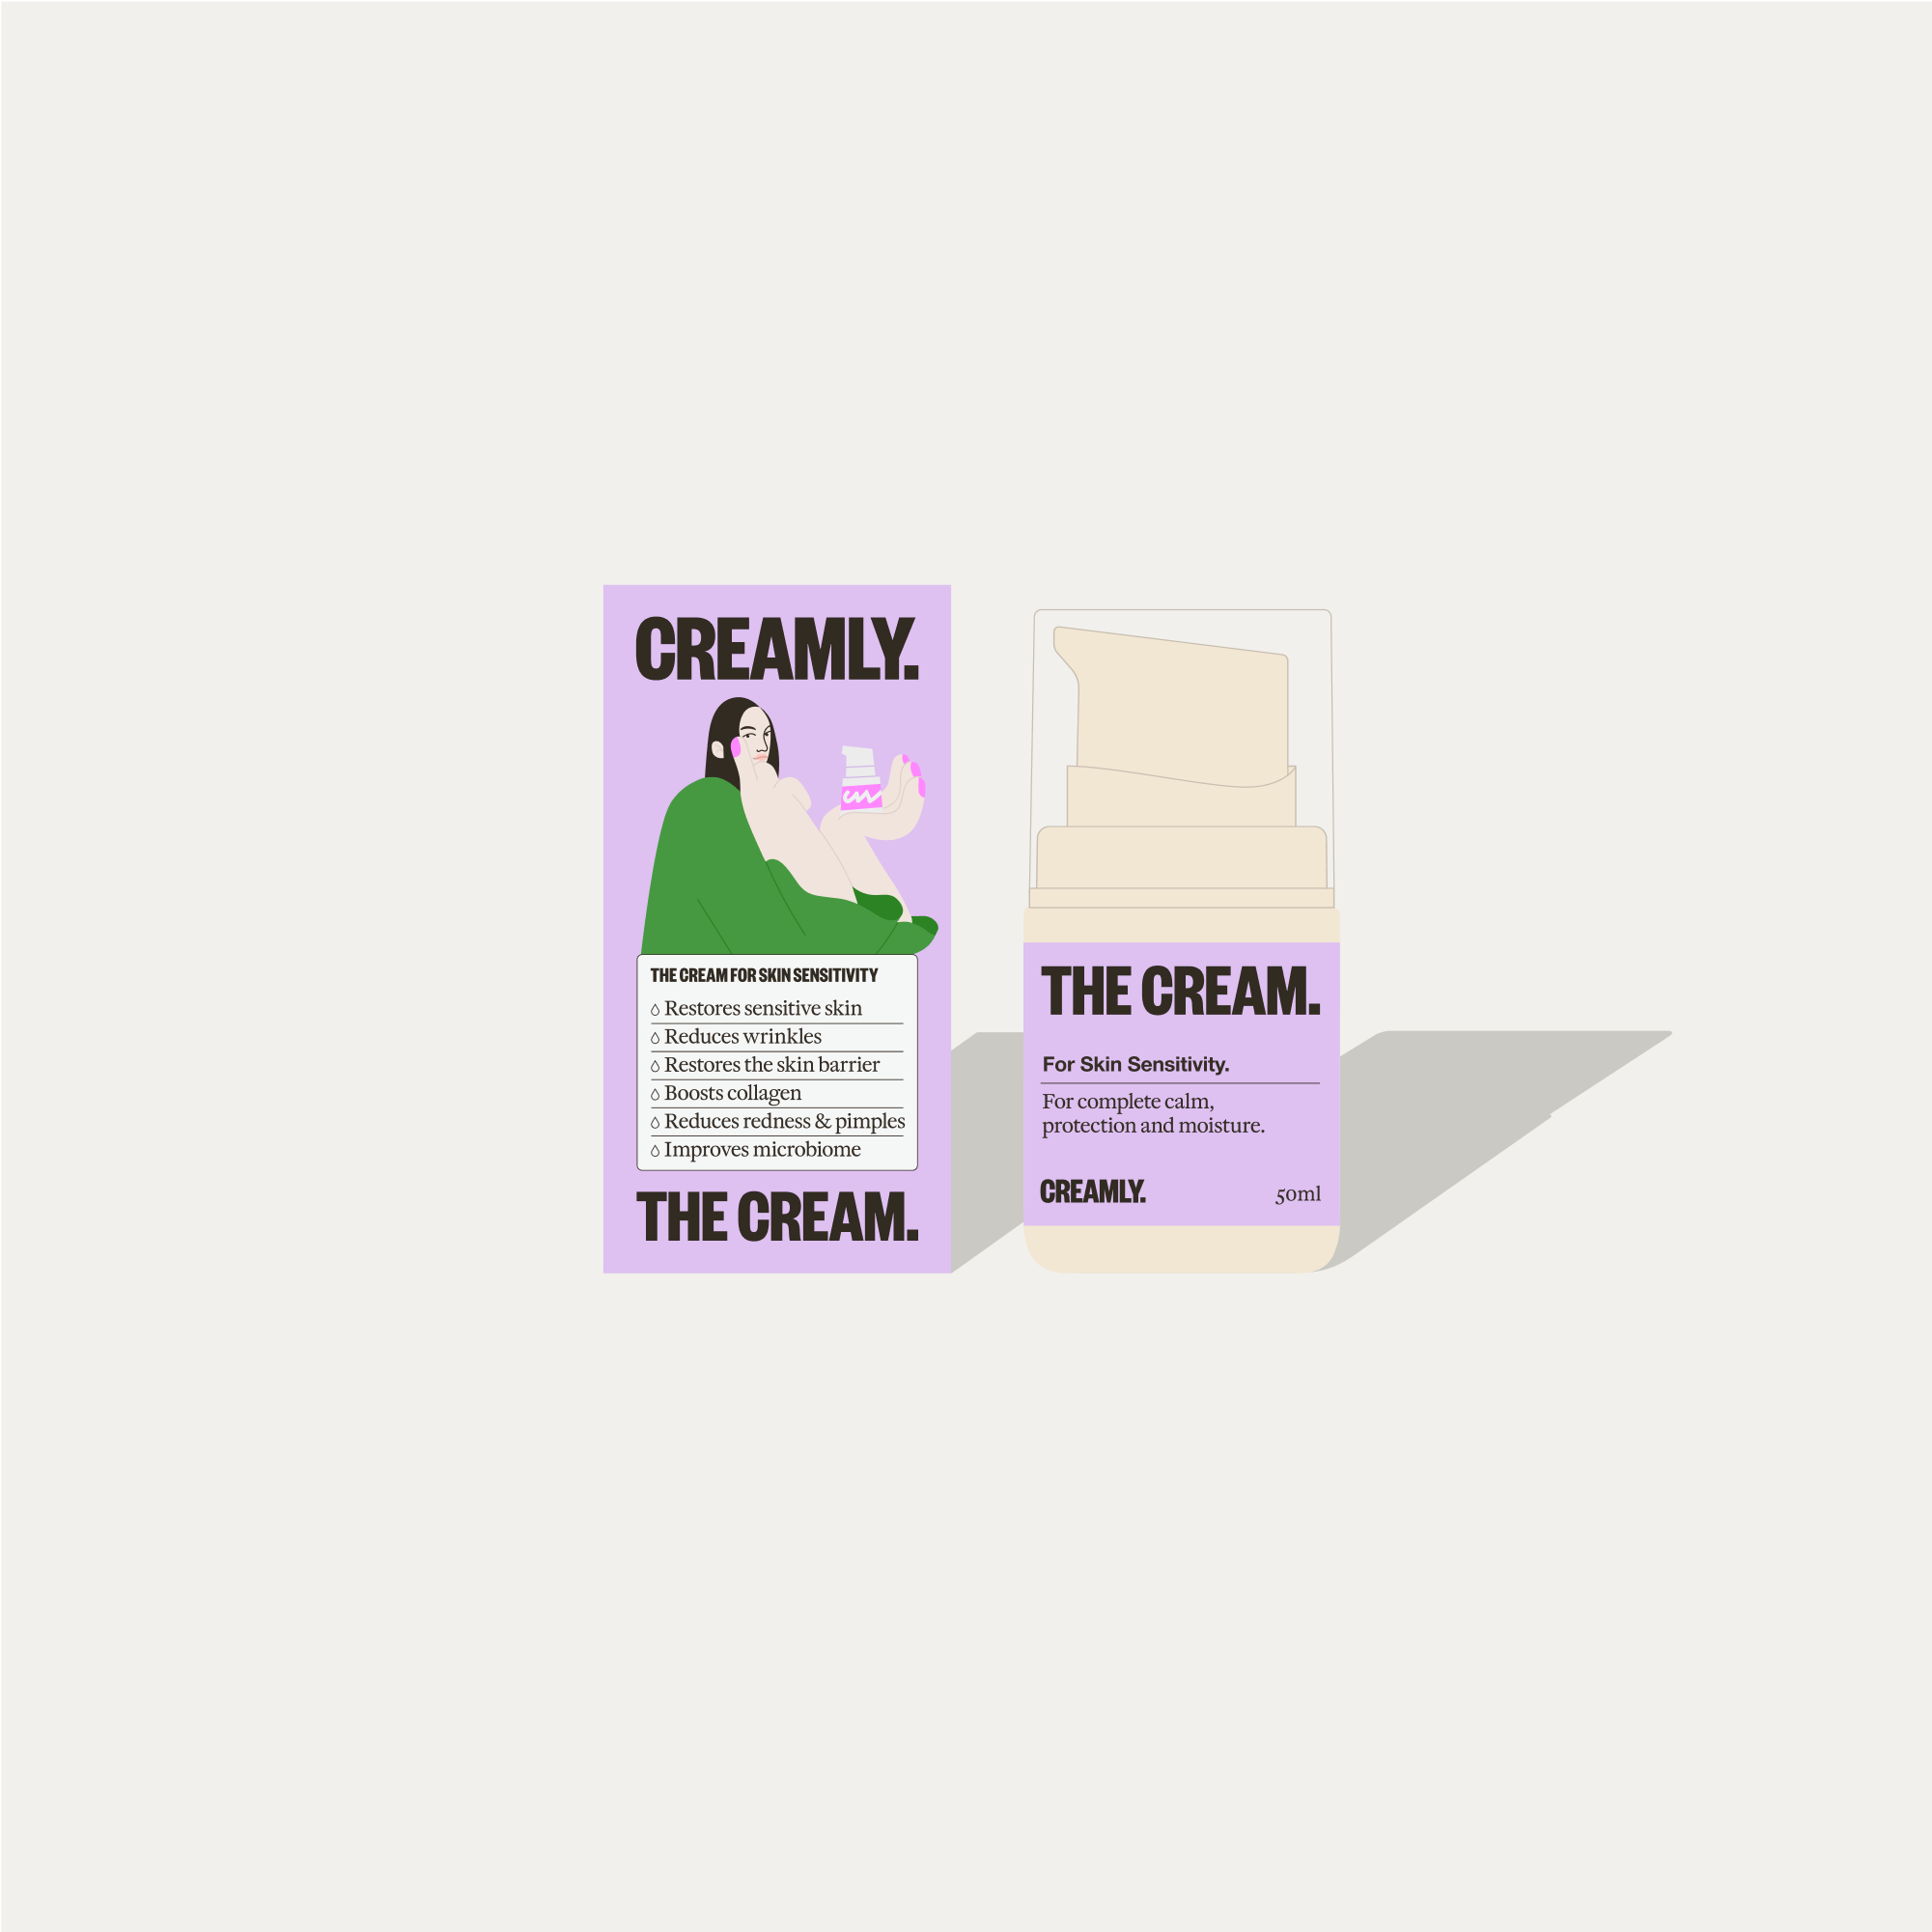 The Cream. For Skin Sensitivity.